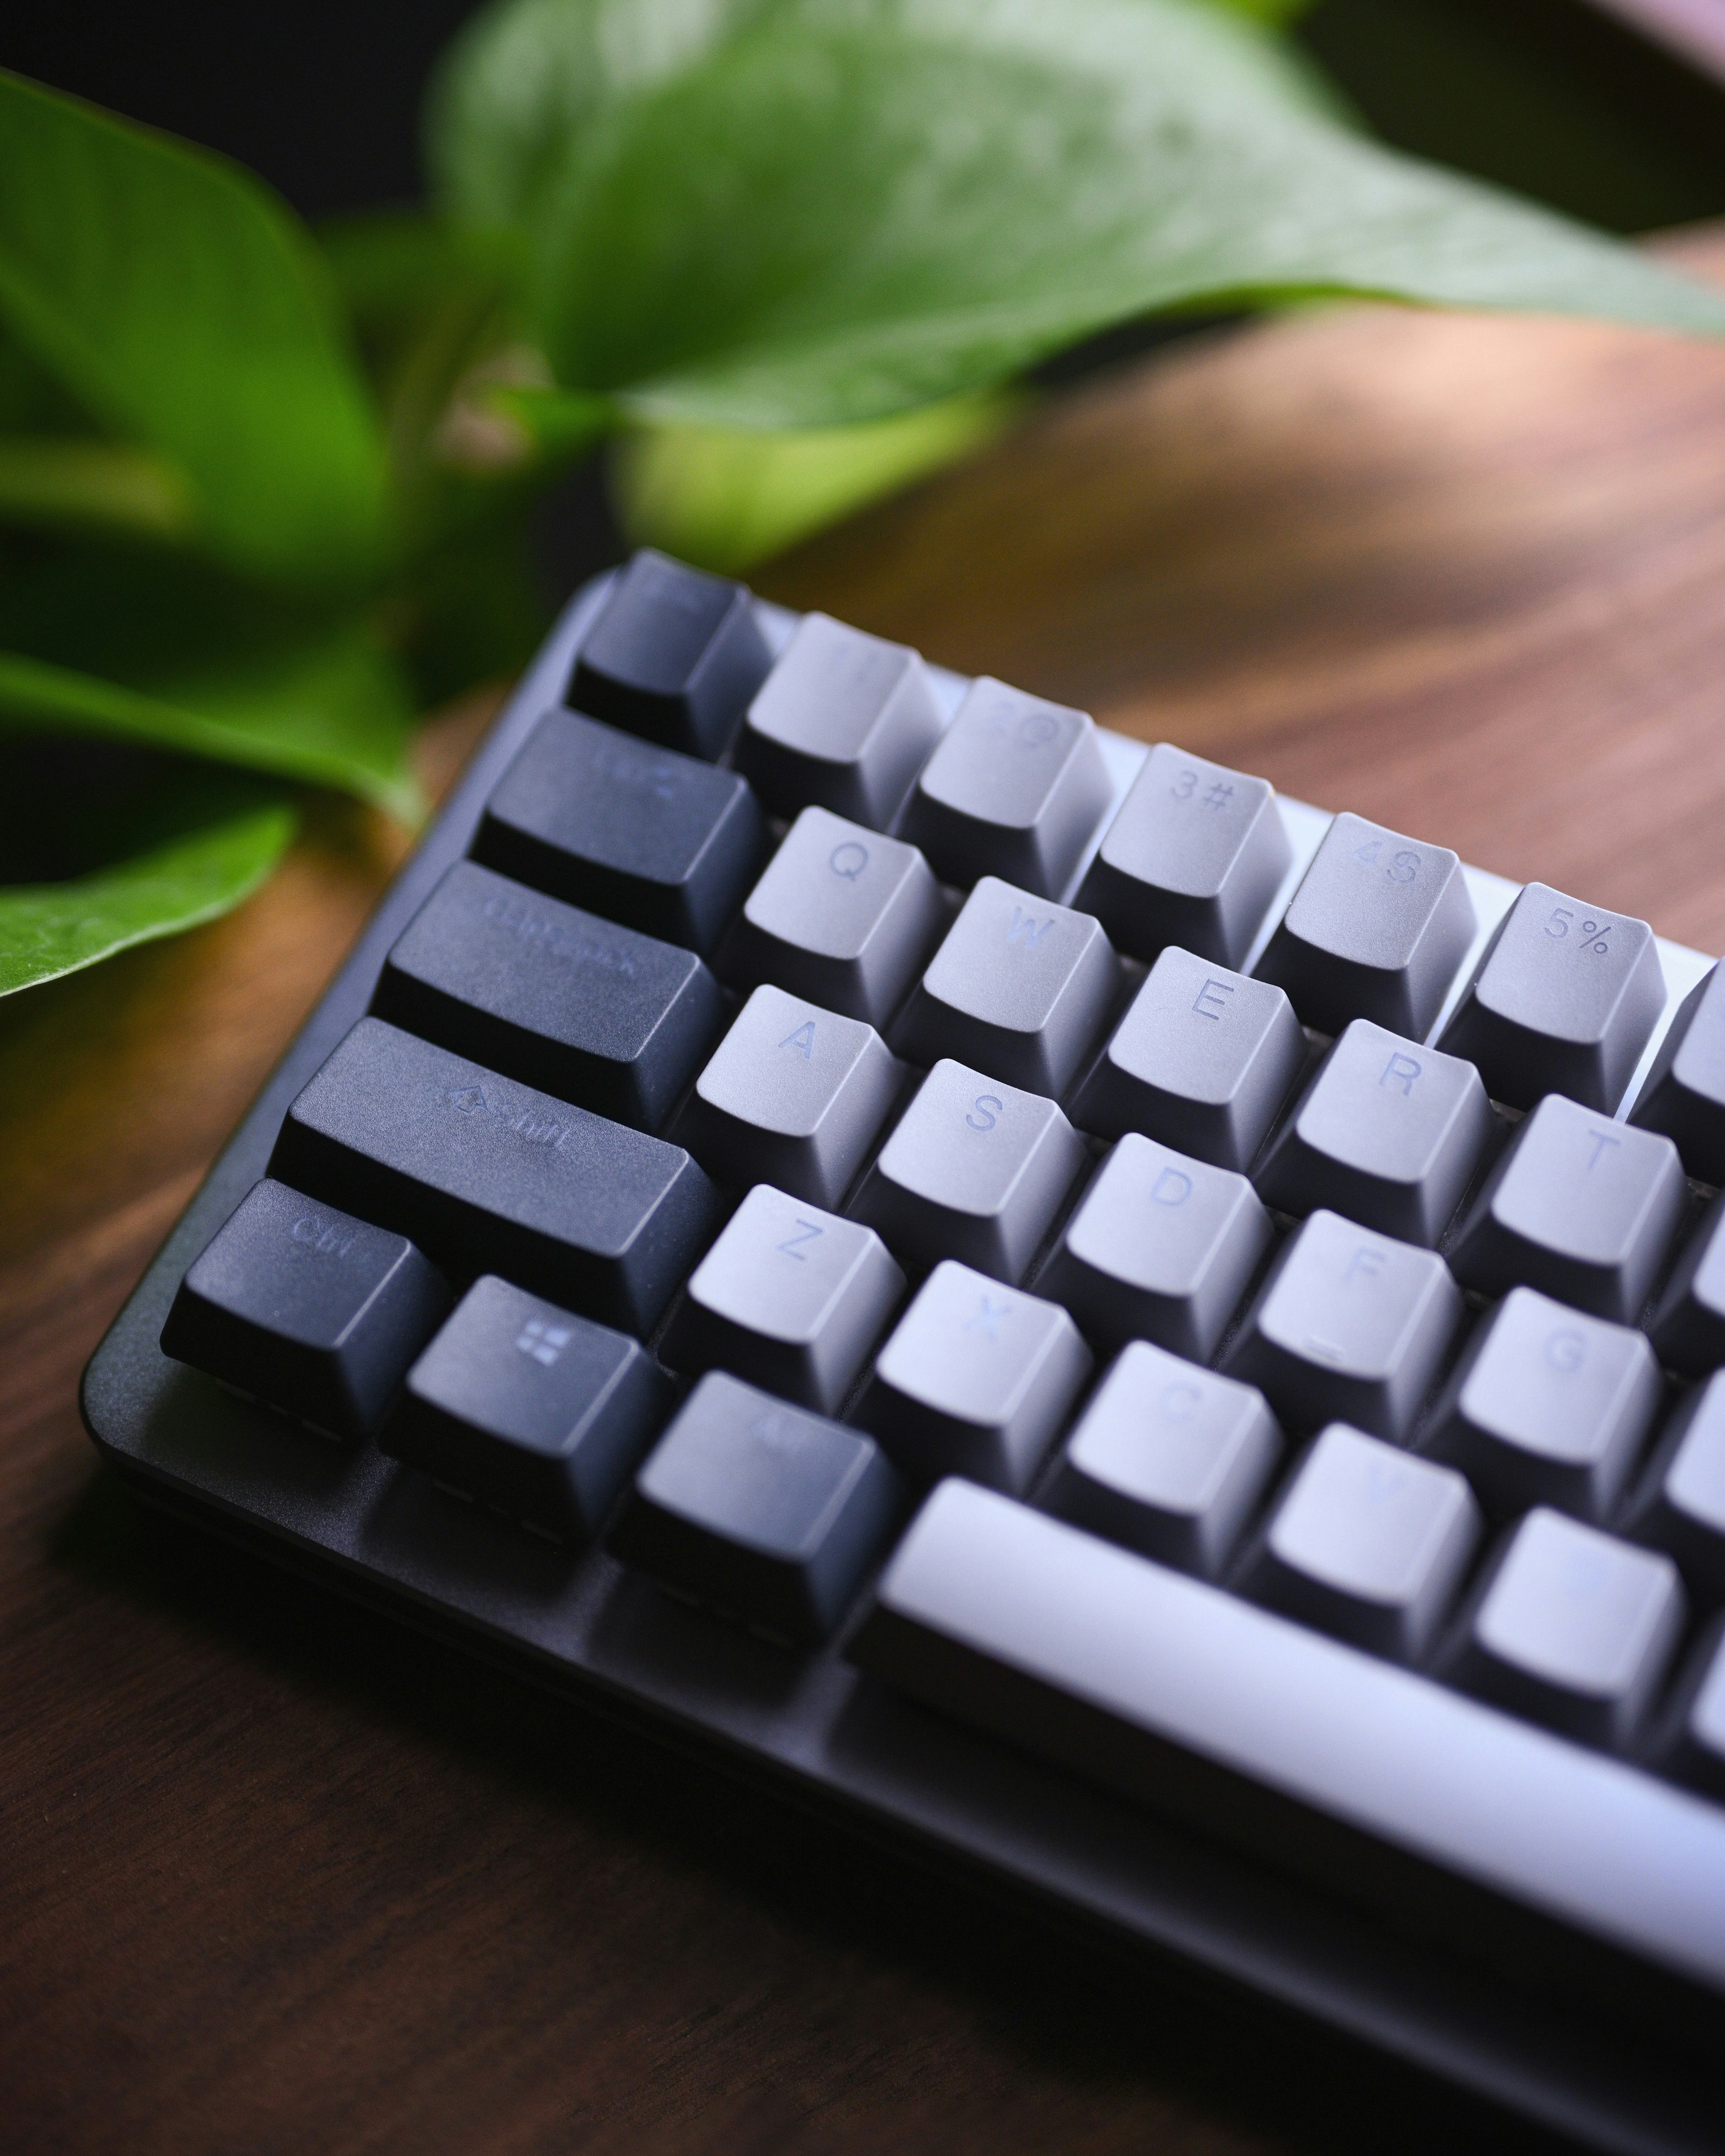 keyboard layout editor space between keys and nav cluster